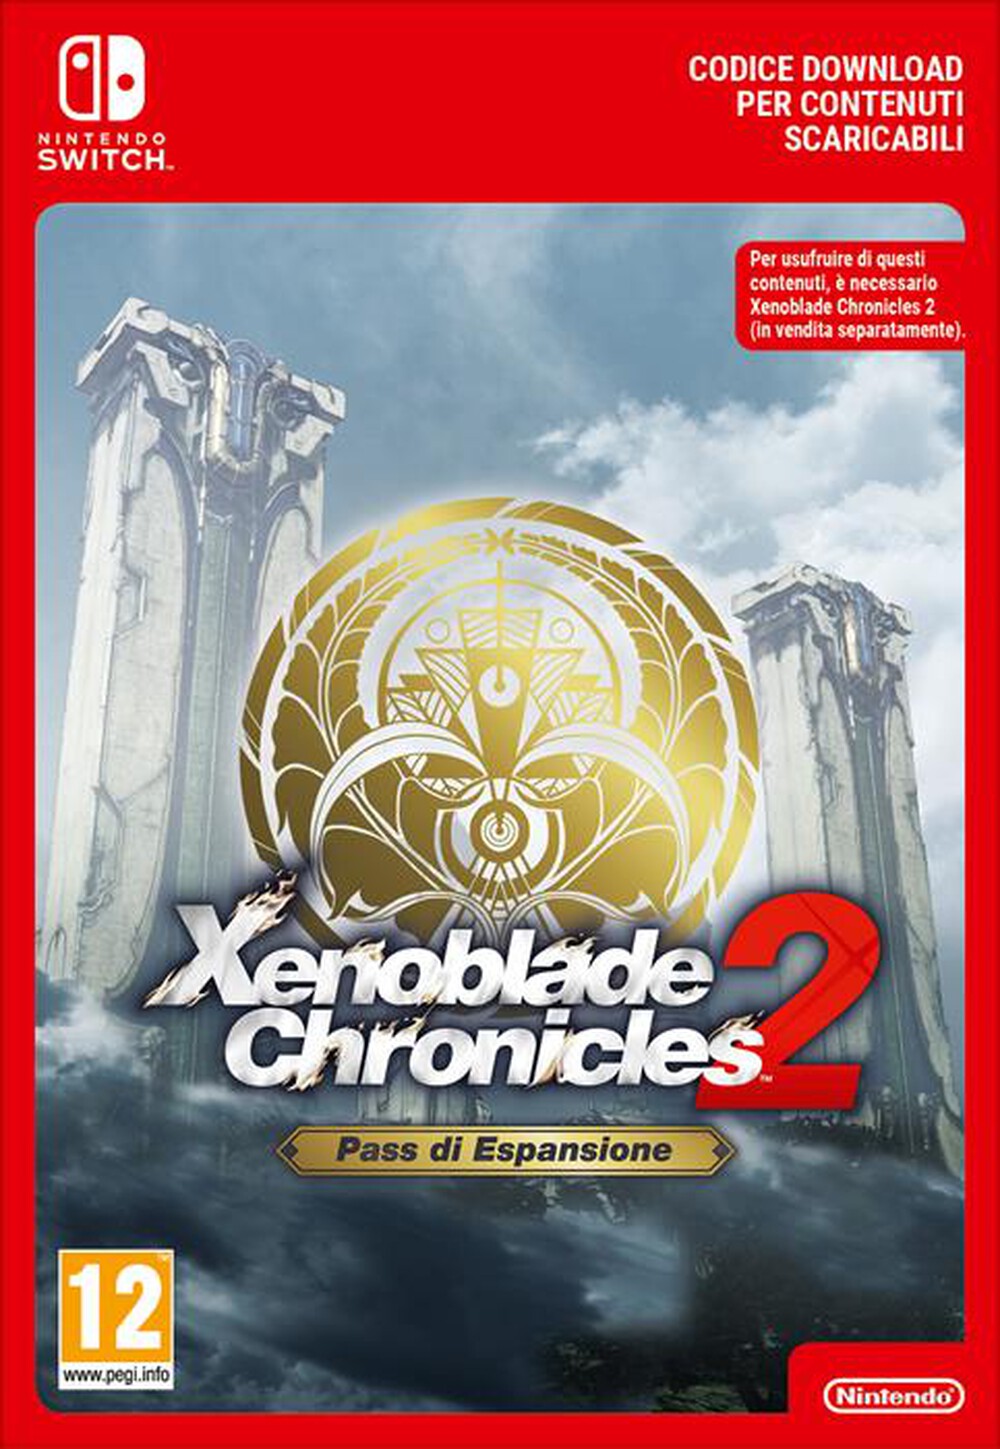 "NINTENDO - Xenoblade Chronicles 2: Expansion Pass"